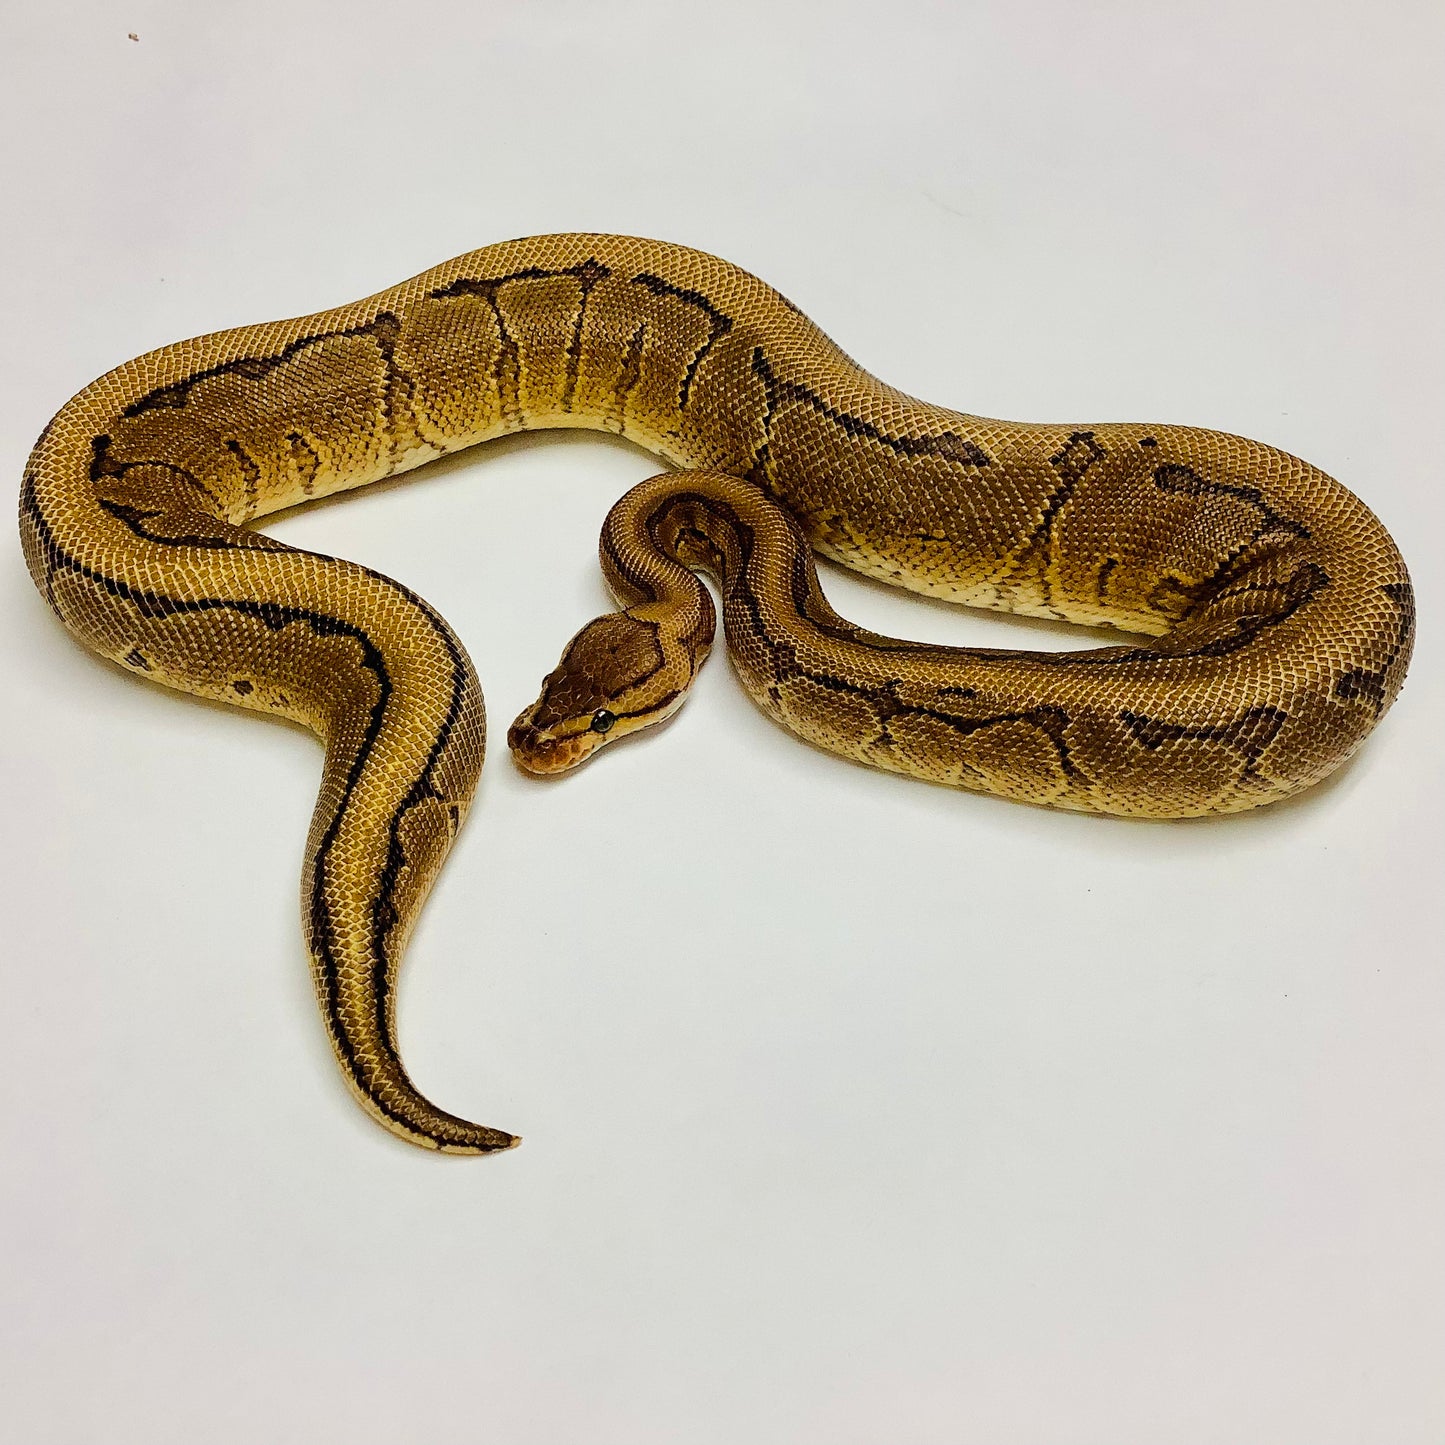 Pinstripe Red Stripe Yellowbelly Ball Python - Male #2021M01-1